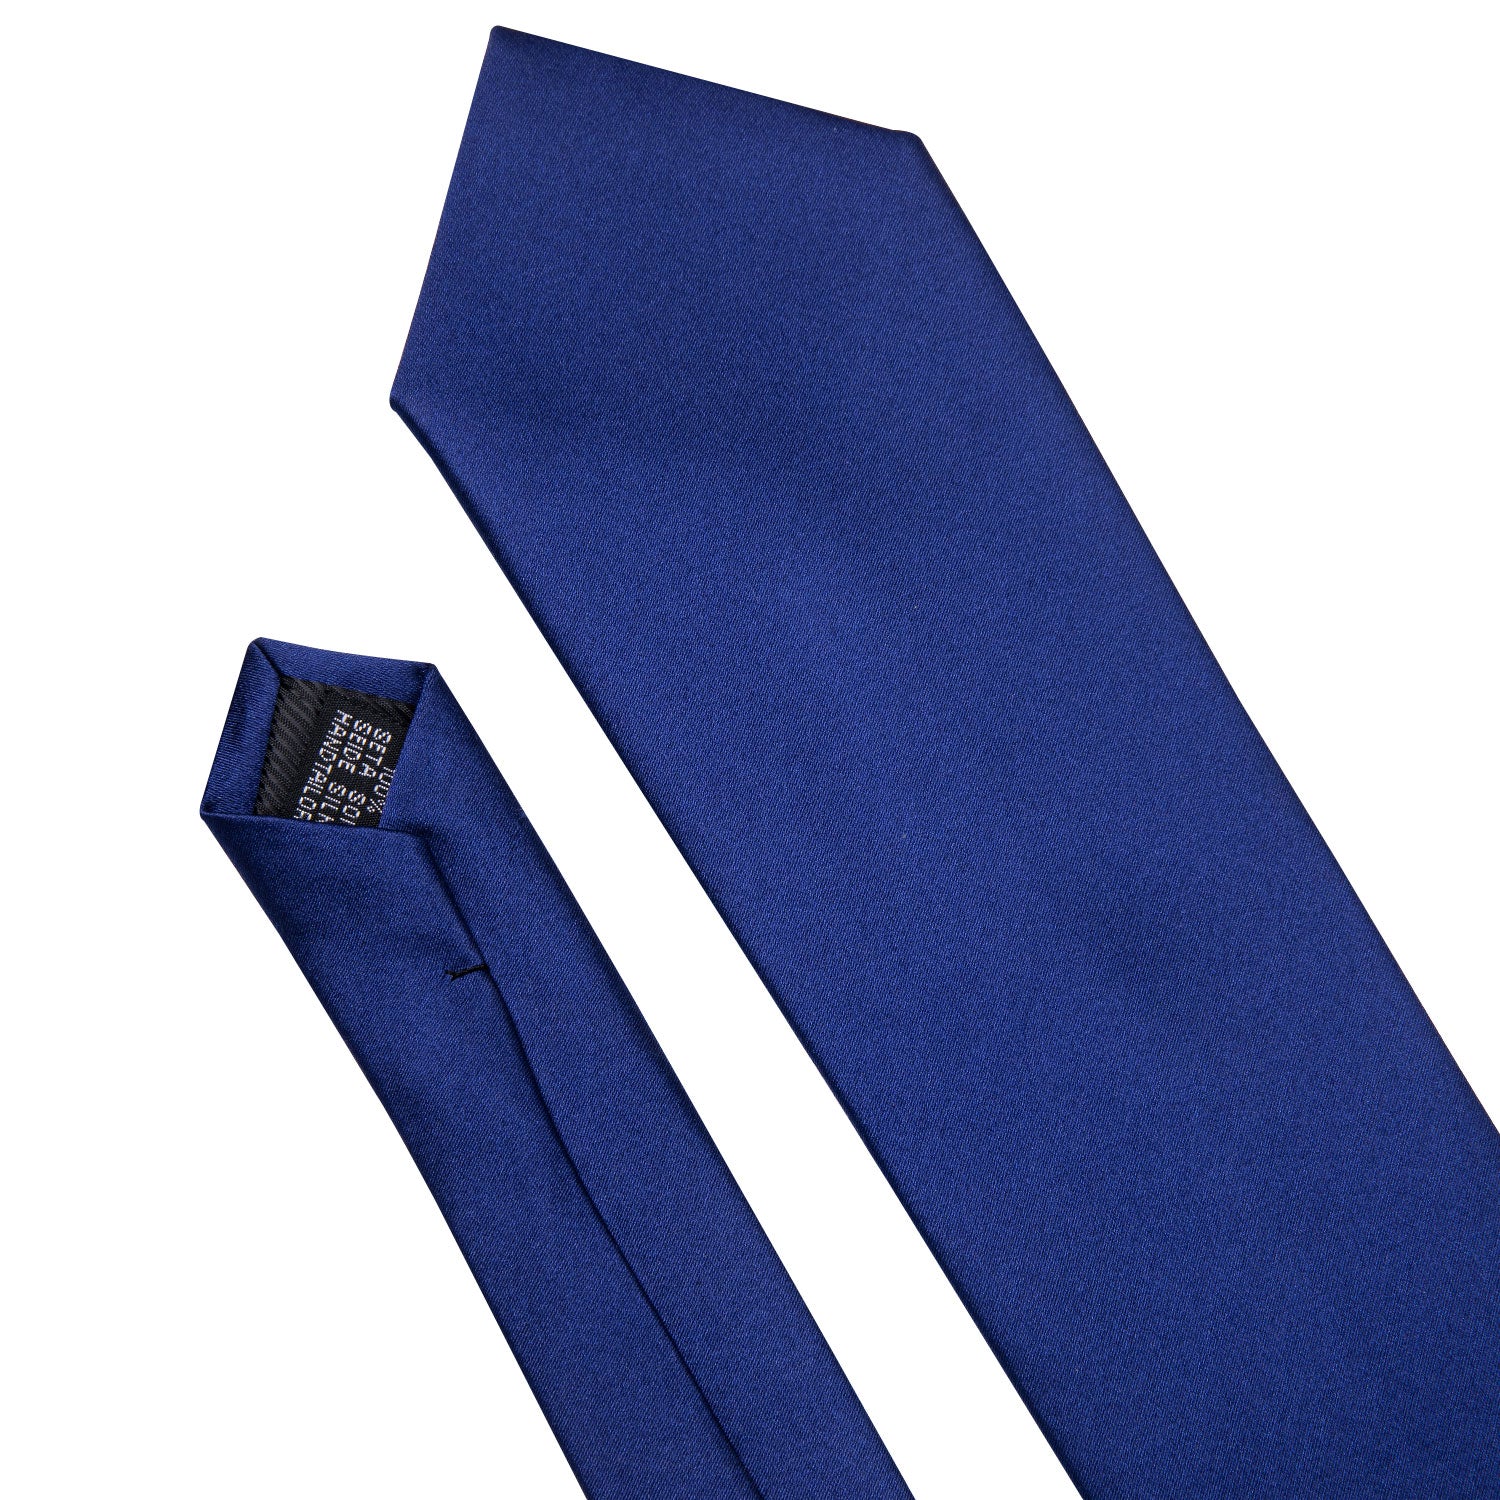 Barry.wang Blue Tie Solid Silk Tie Hanky Cufflinks Set Classic Hot